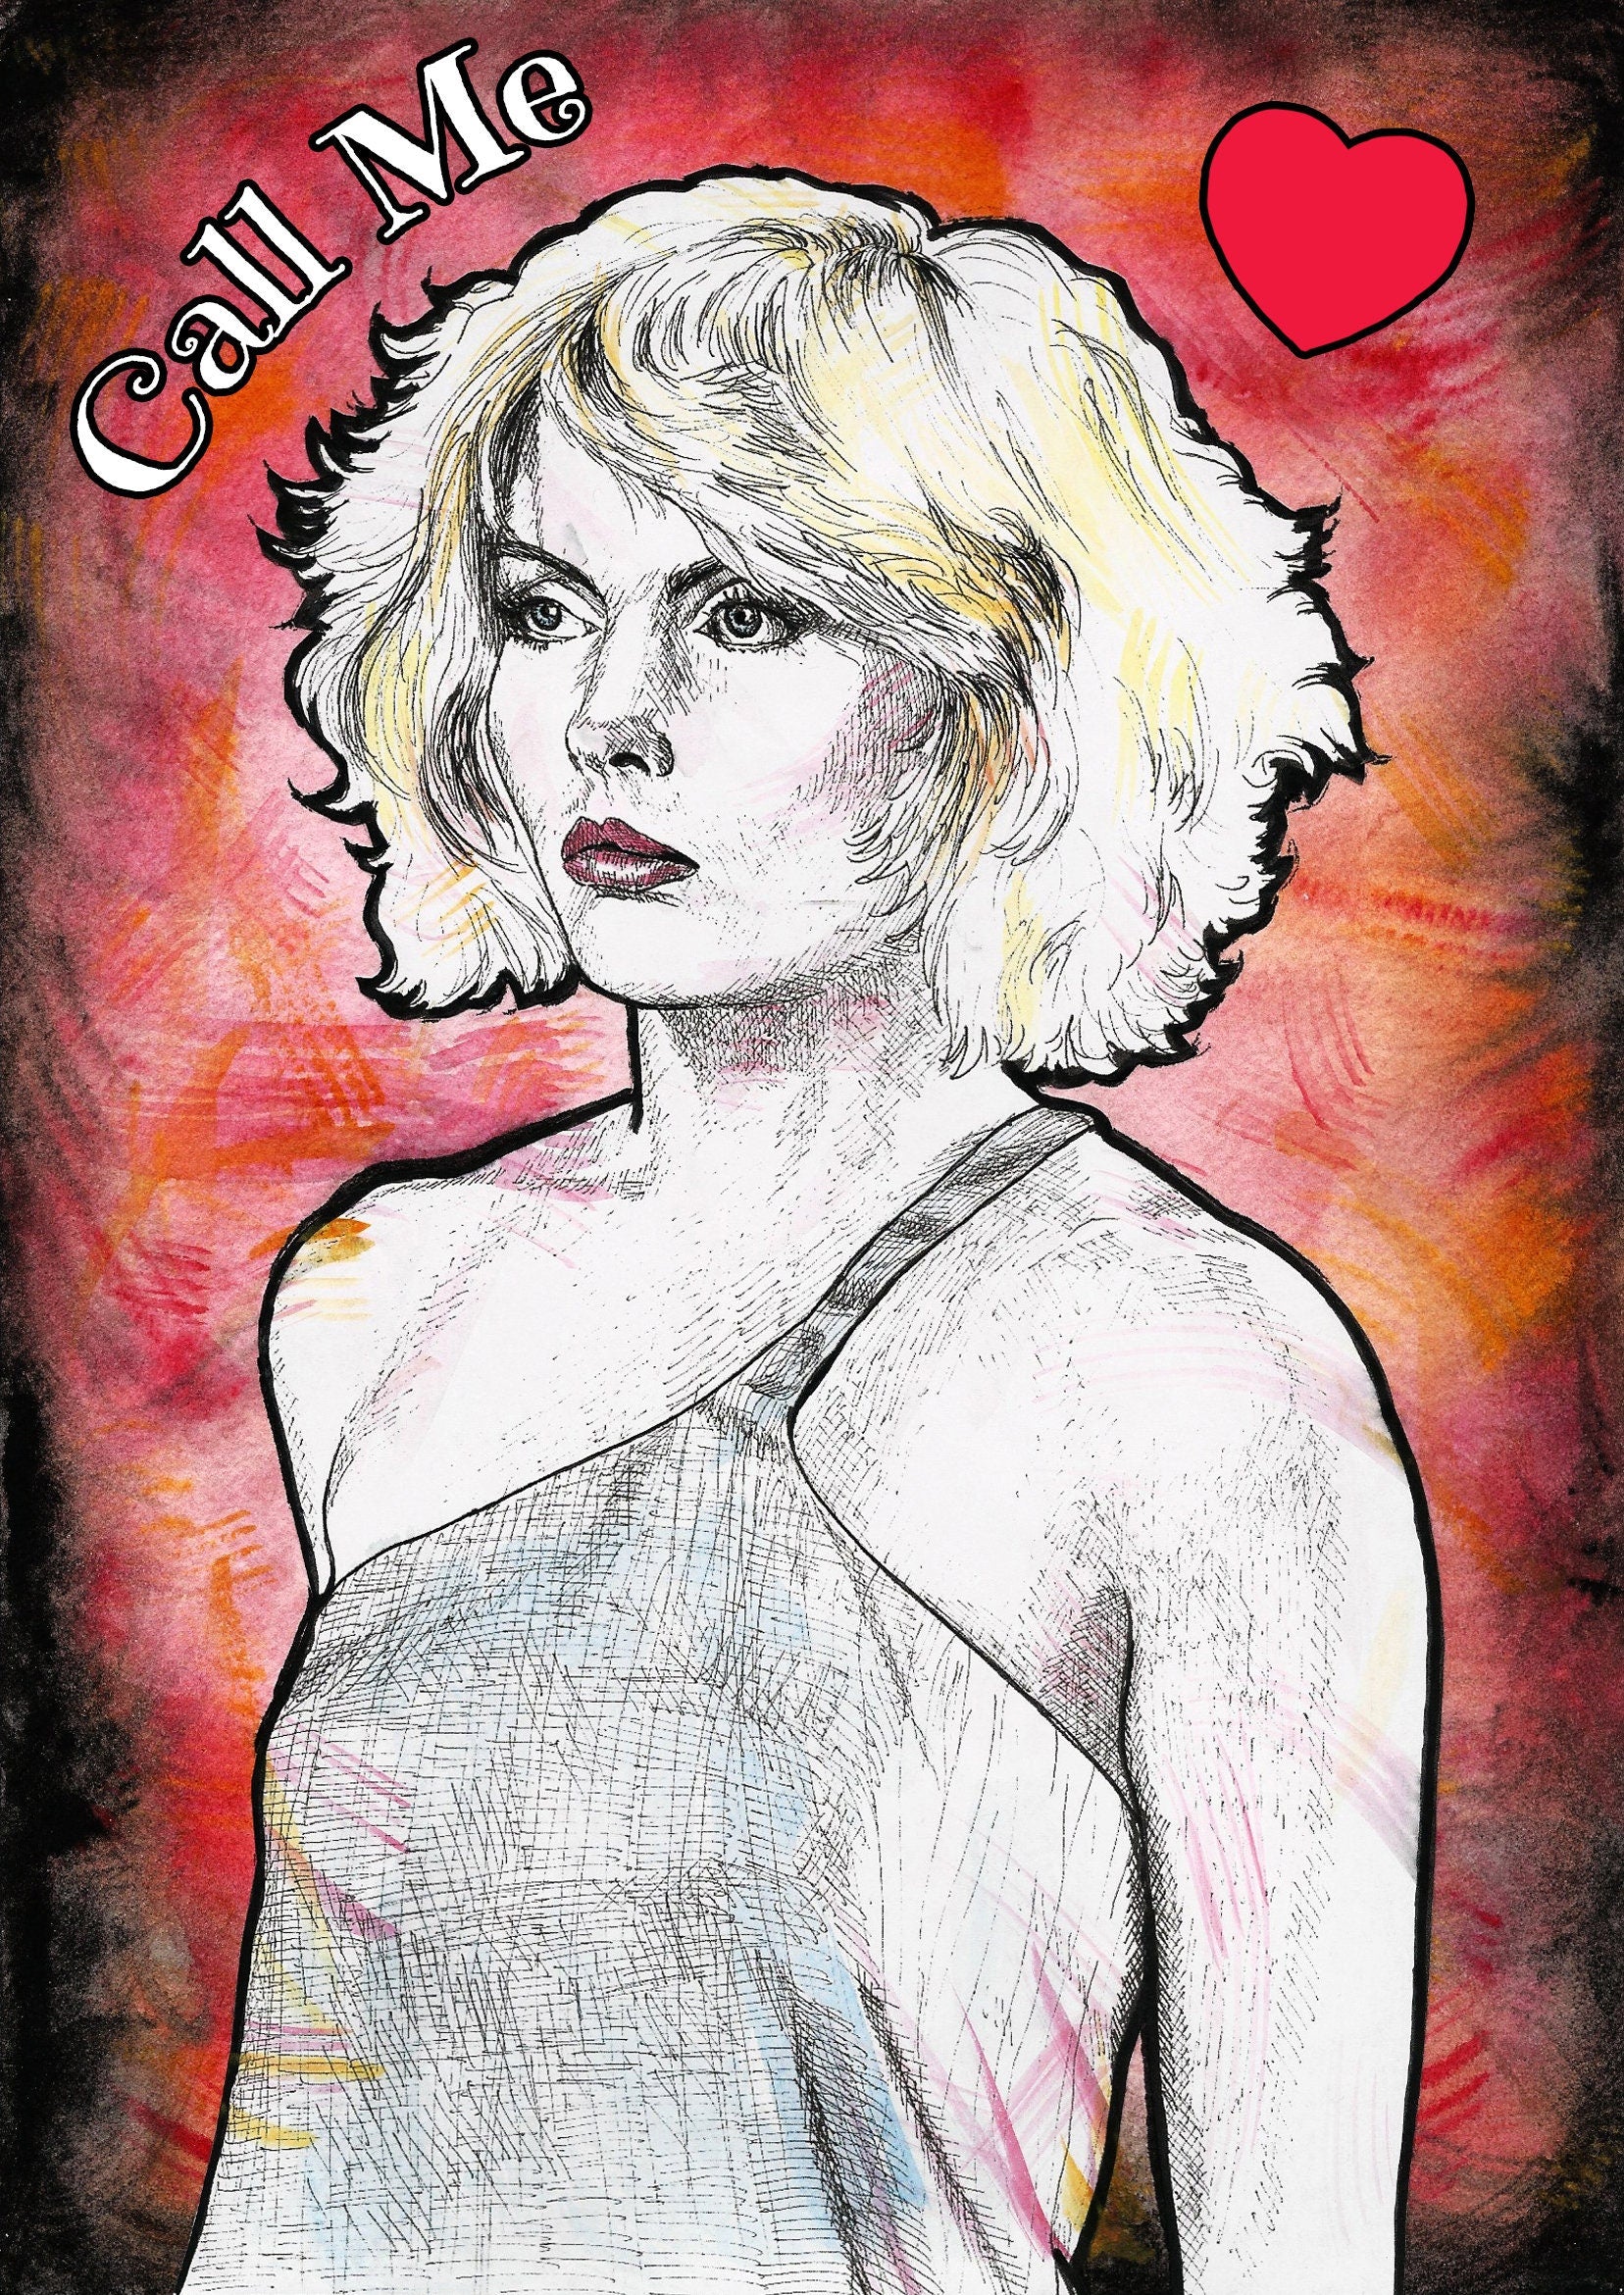 Debbie Harry of Blondie Love card "Call Me" | Blondie gift | Rock Icon | Greeting Card | Valentines | Cards | Punk | Pop Art | New Wave